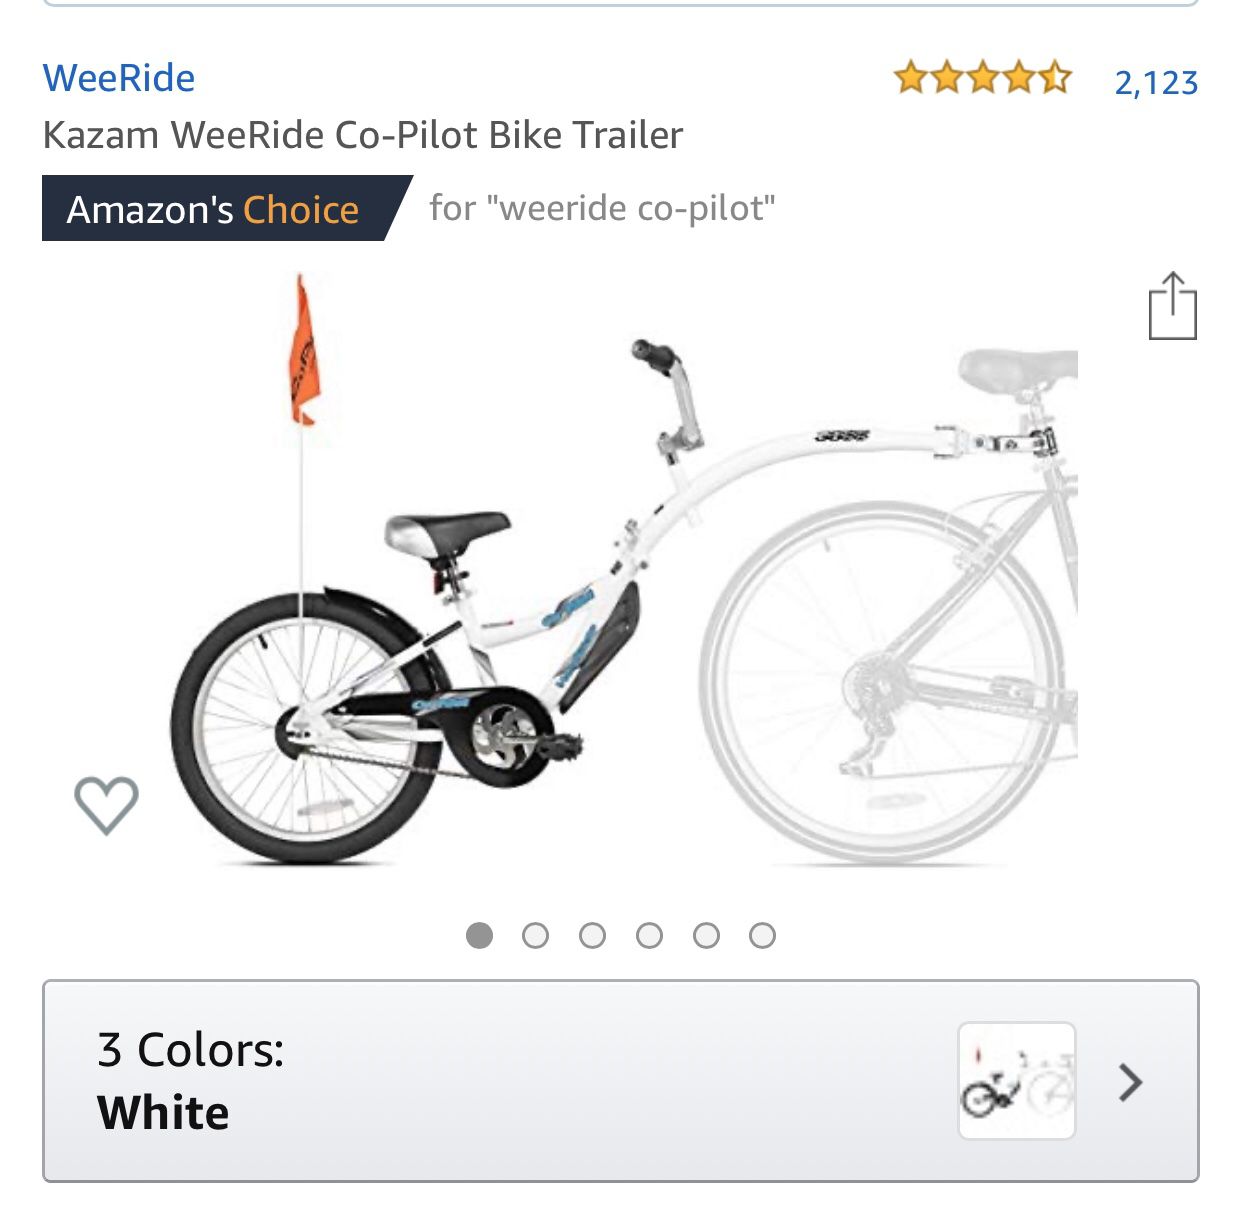 Kazam WeeRide Co-Pilot Bike Trailer white